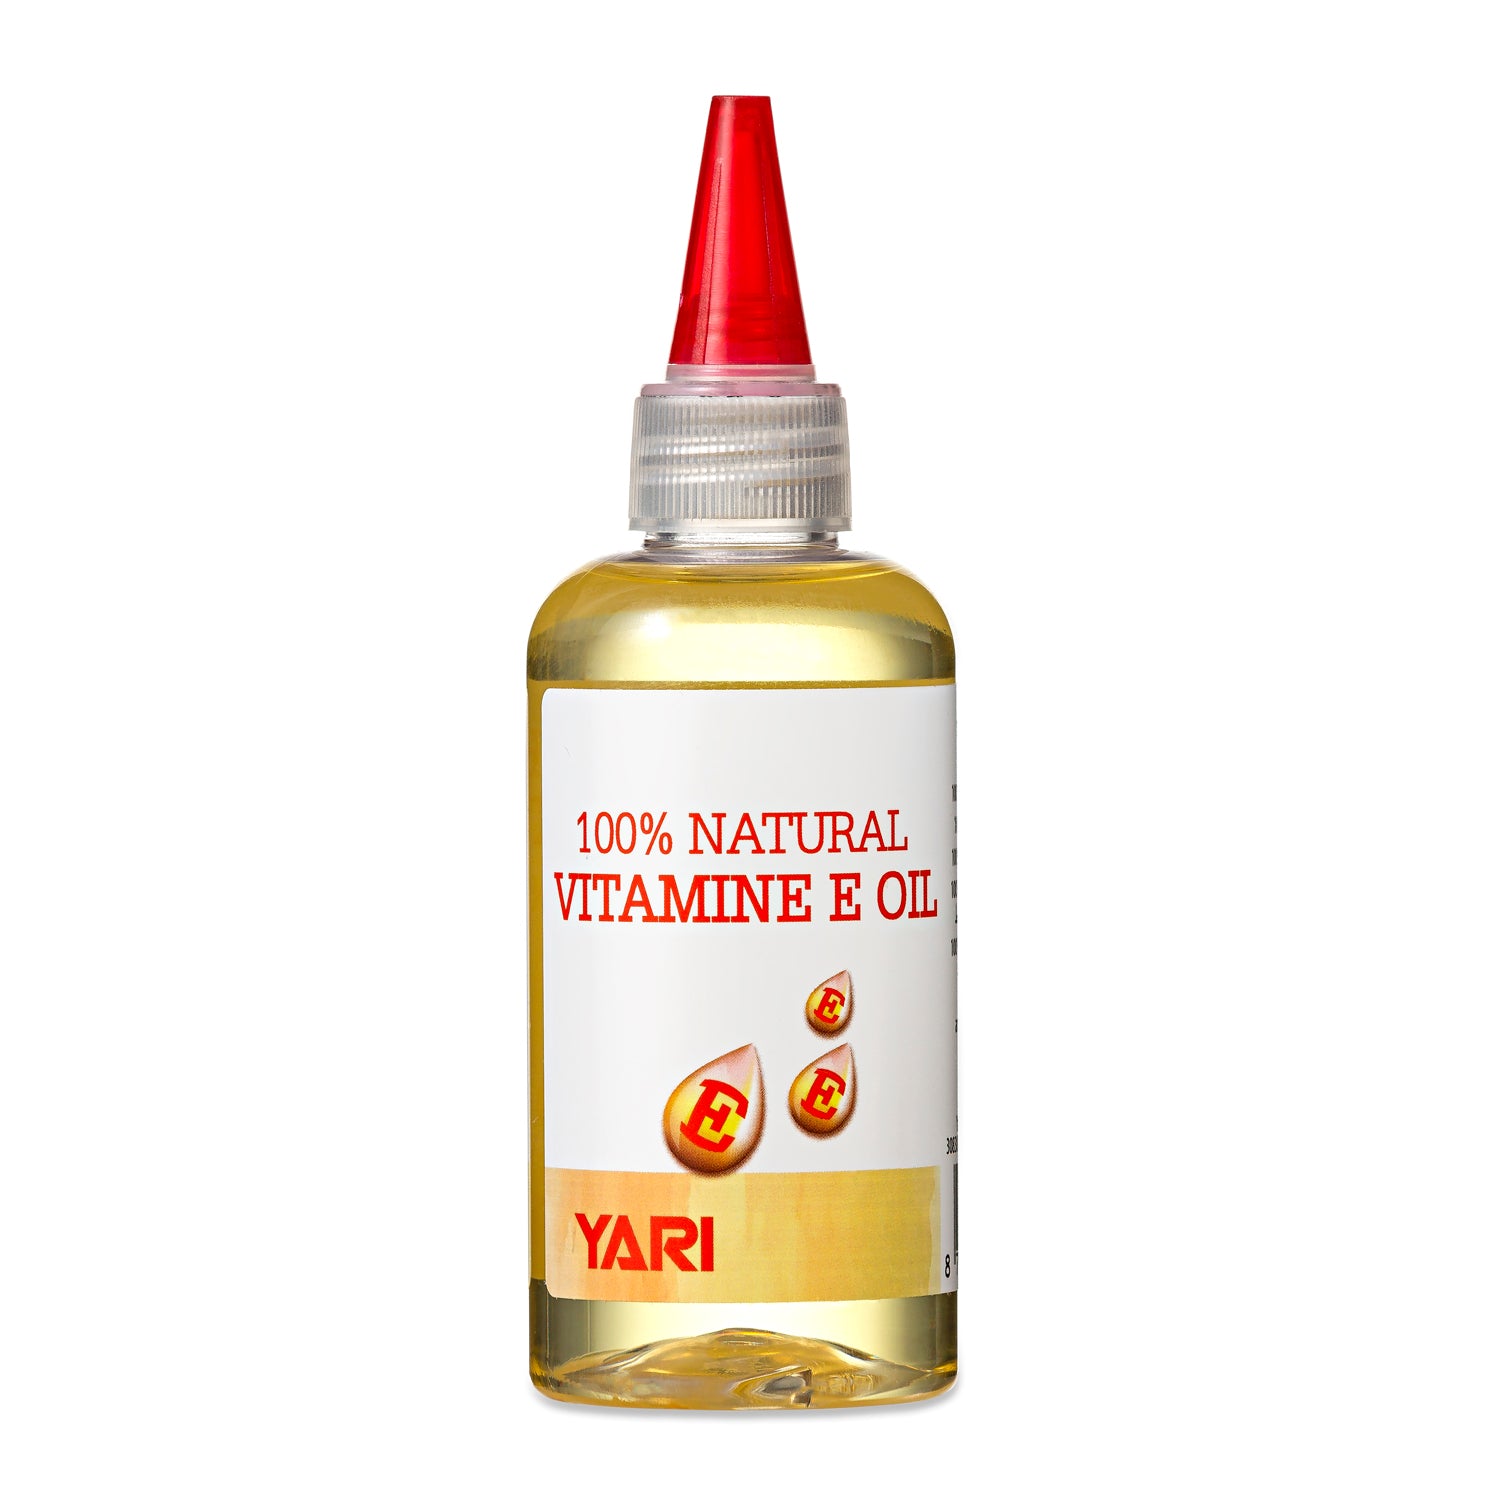 Yari - 100% Natural Vitamin E Oil 110ml